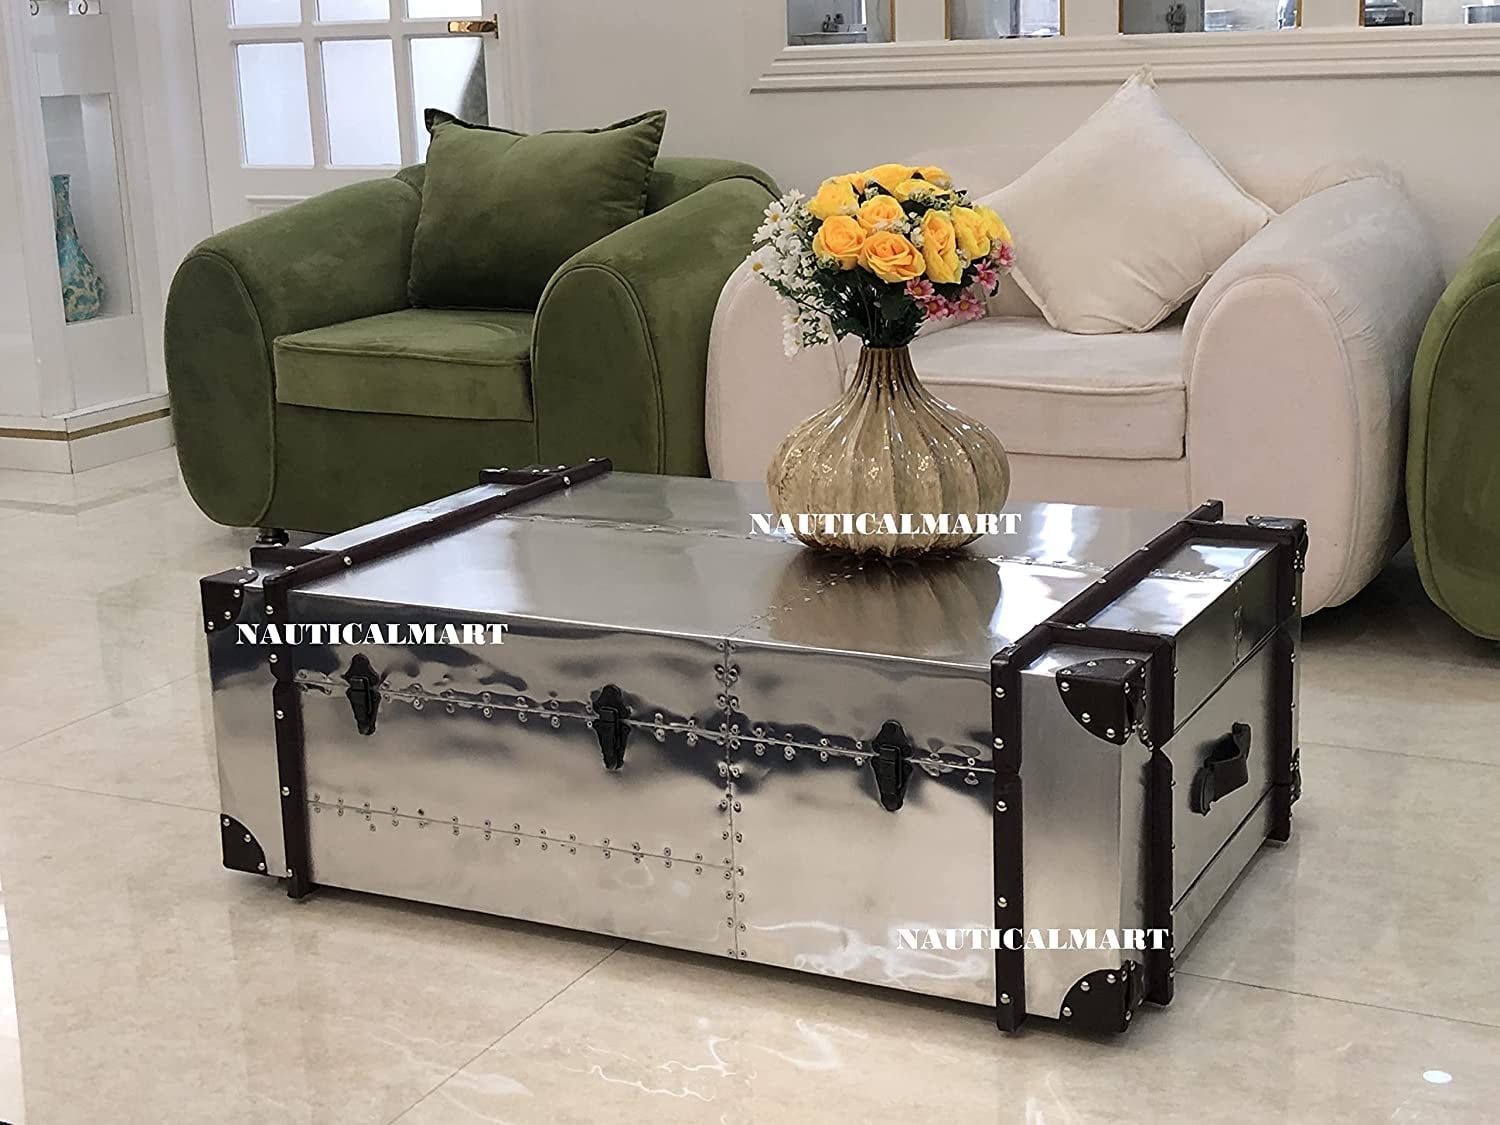 Richard's Trunk Coffee Table Aluminum Aviator Furniture (48 Inches